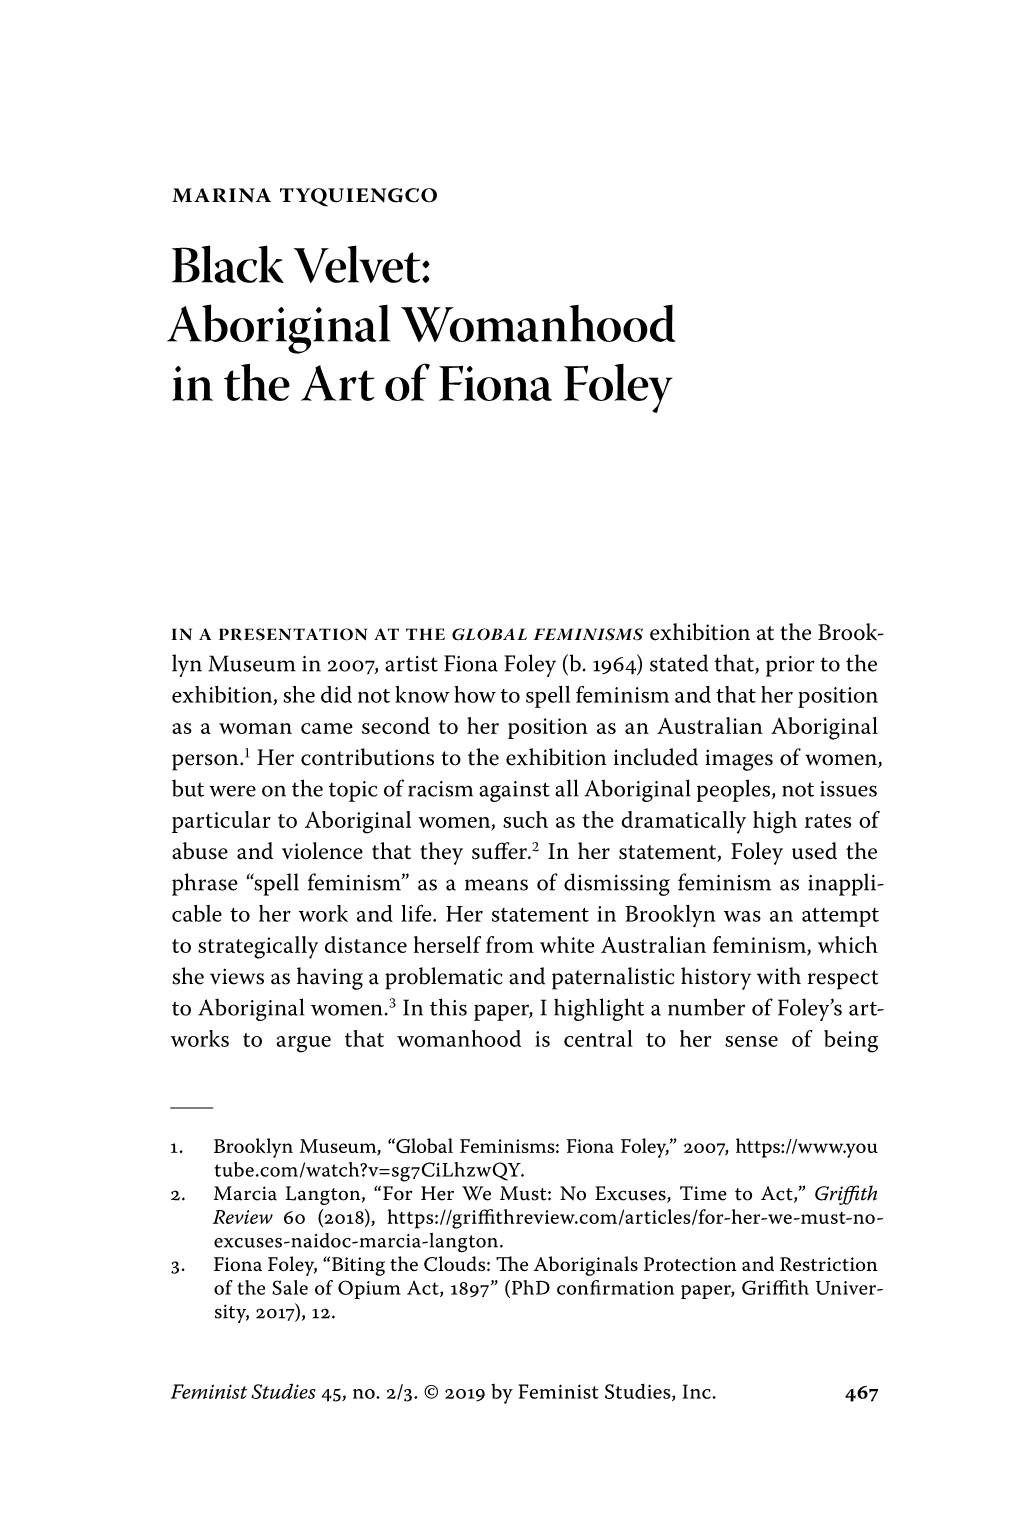 Black Velvet: Aboriginal Womanhood in the Art of Fiona Foley